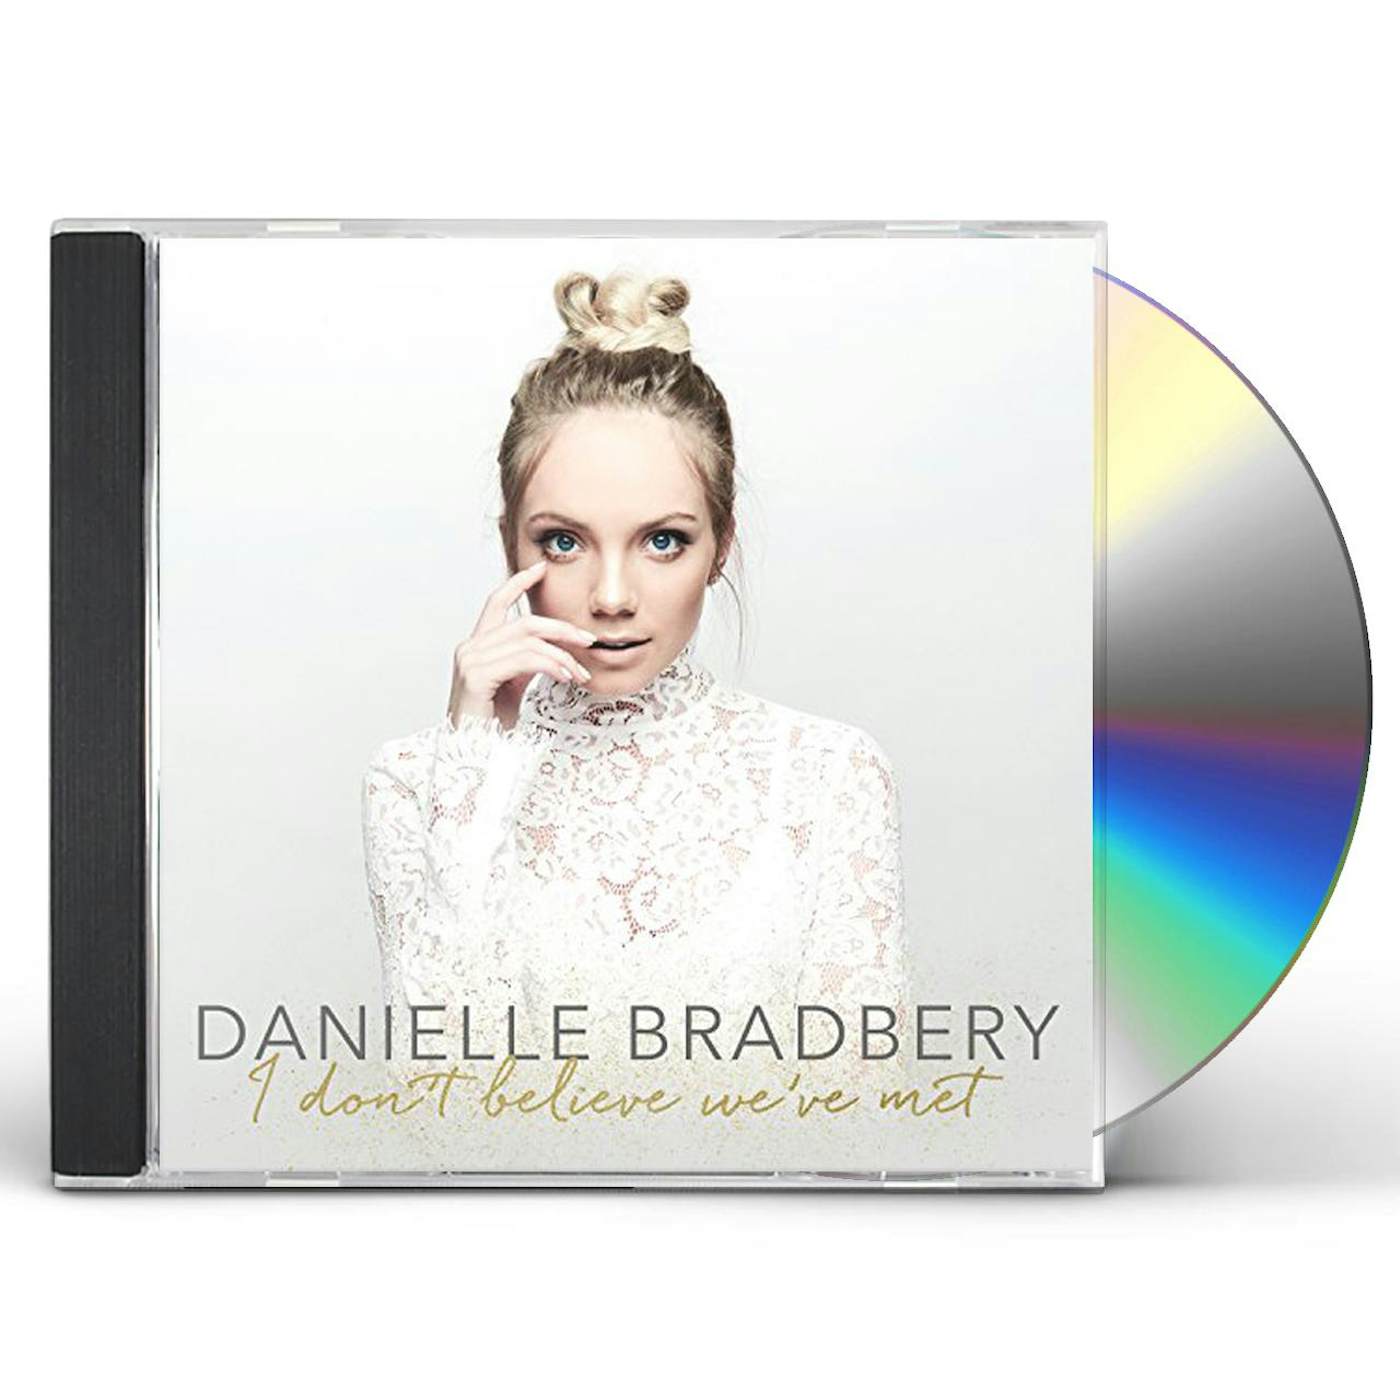 Danielle Bradbery I DON'T BELIEVE WE'VE MET CD